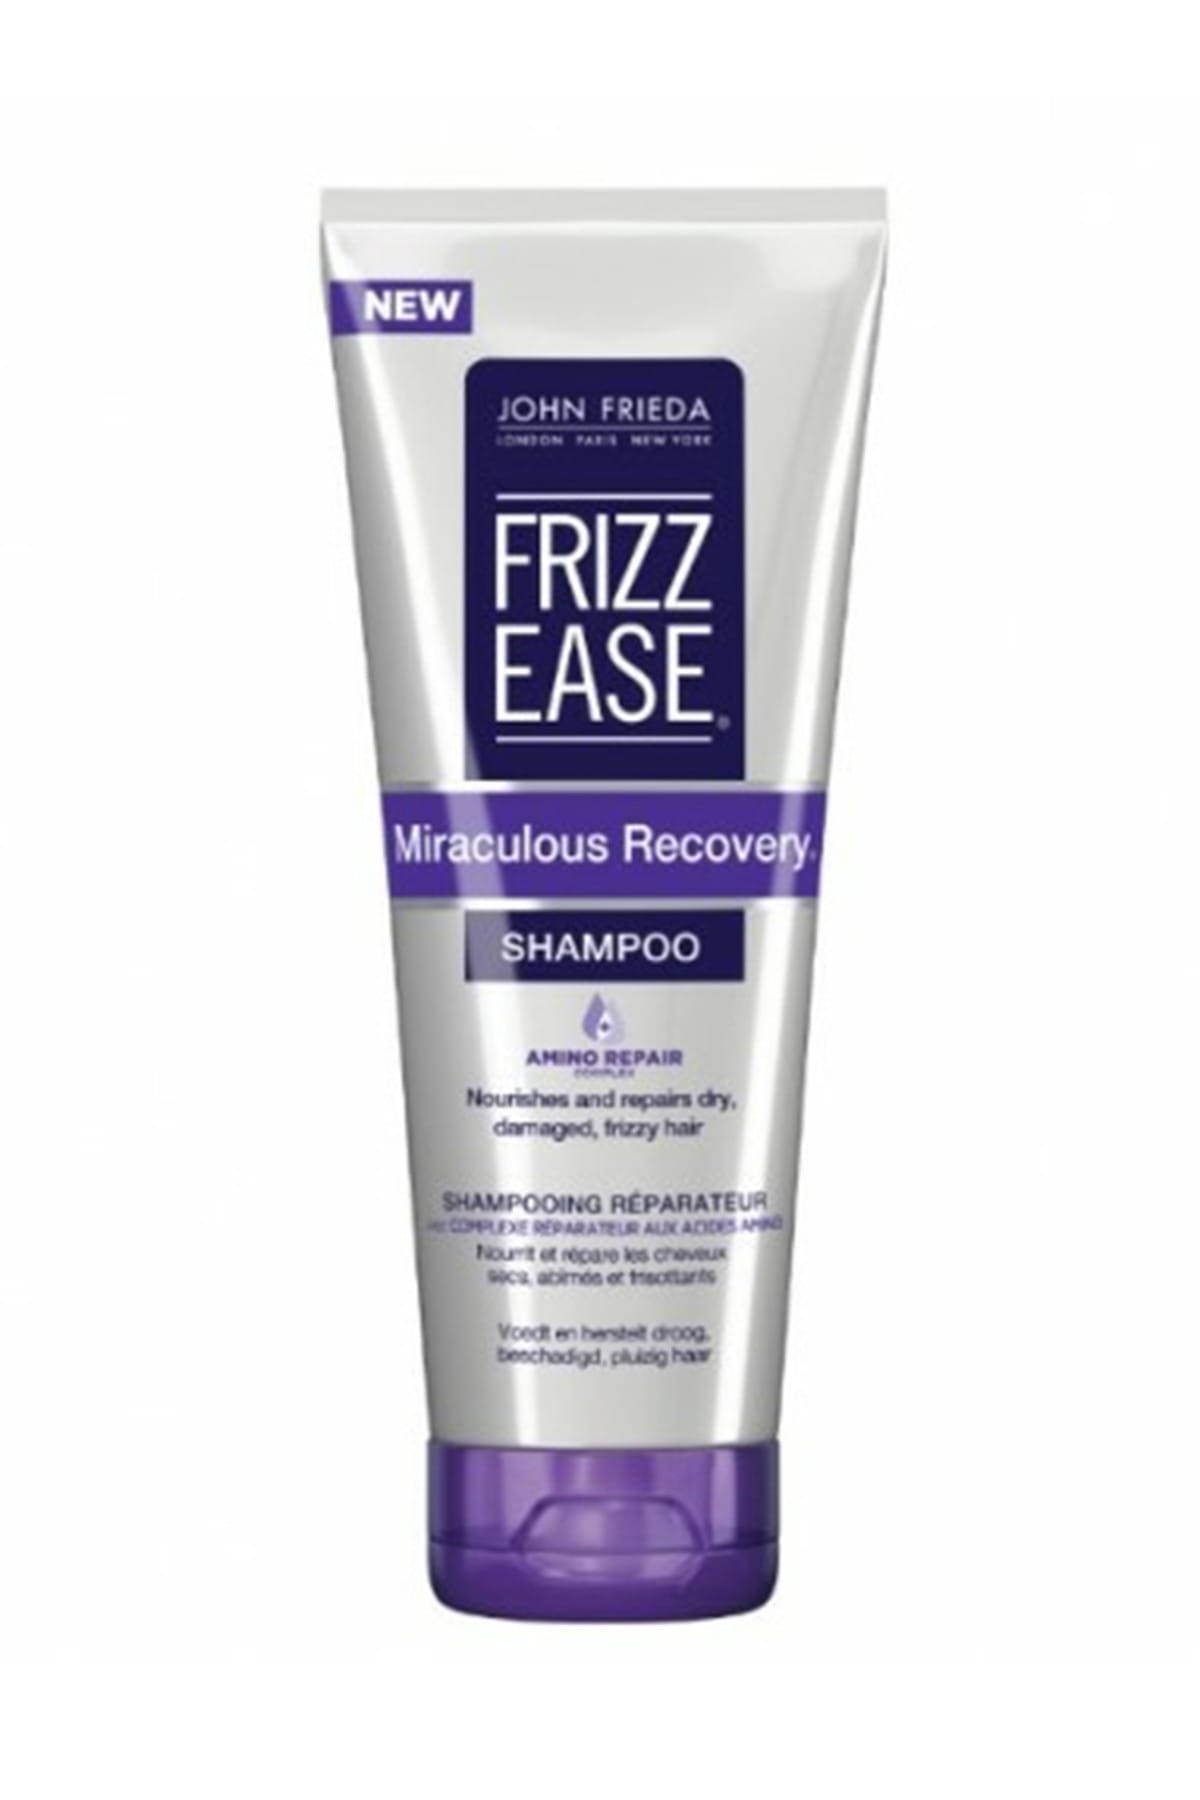 John Frieda Şampuan - Frizz Ease Miraculous Recovery Shampoo 50 ml 5037156220759